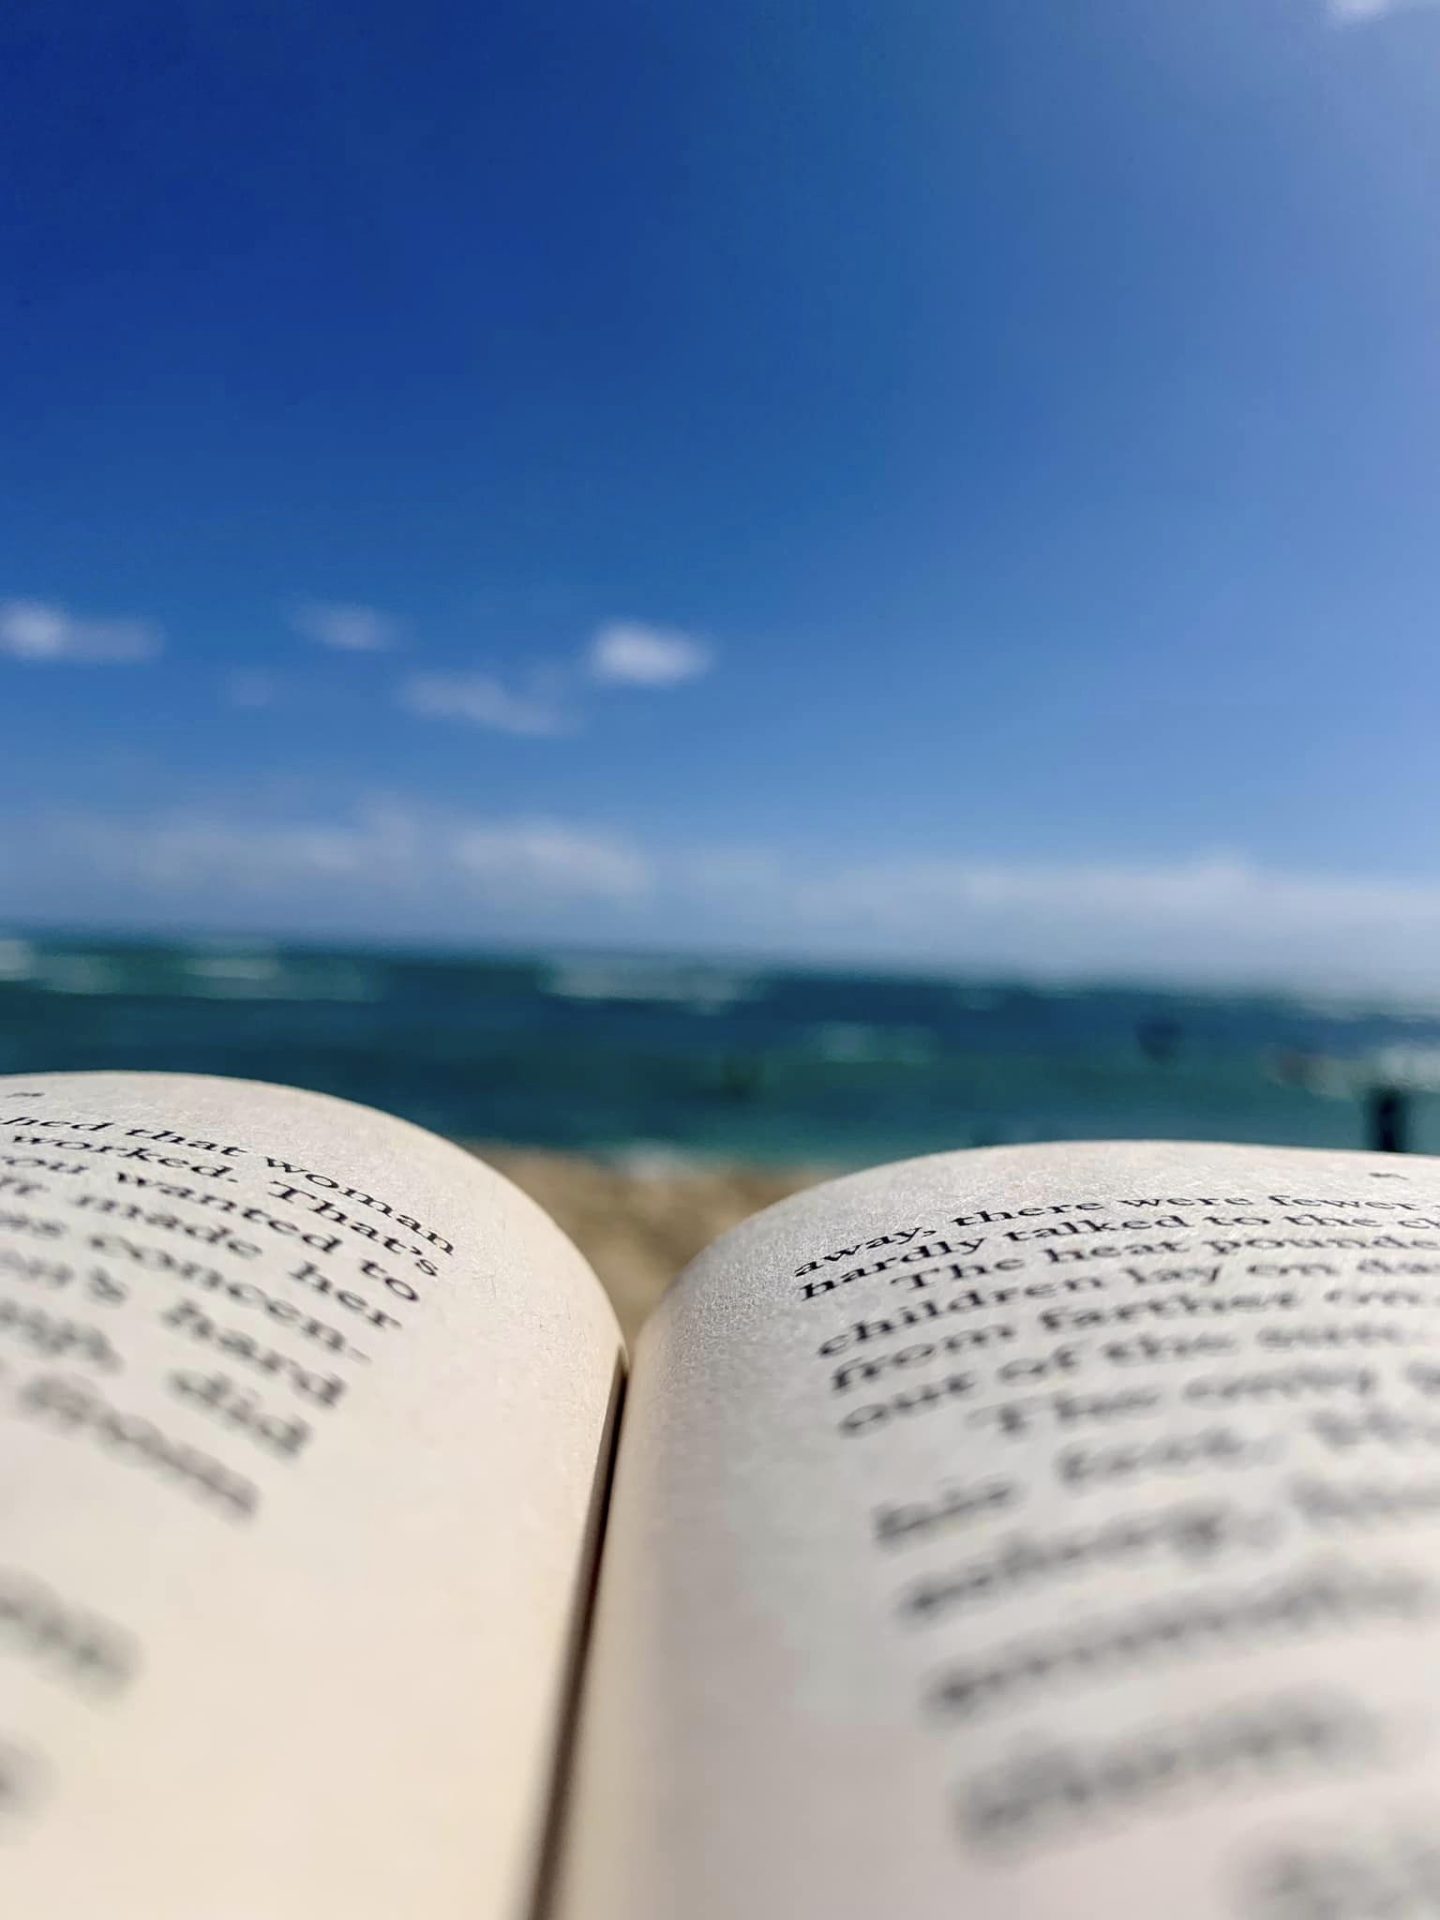 Hawaii Bucket List: Relax on the beach with a good book.